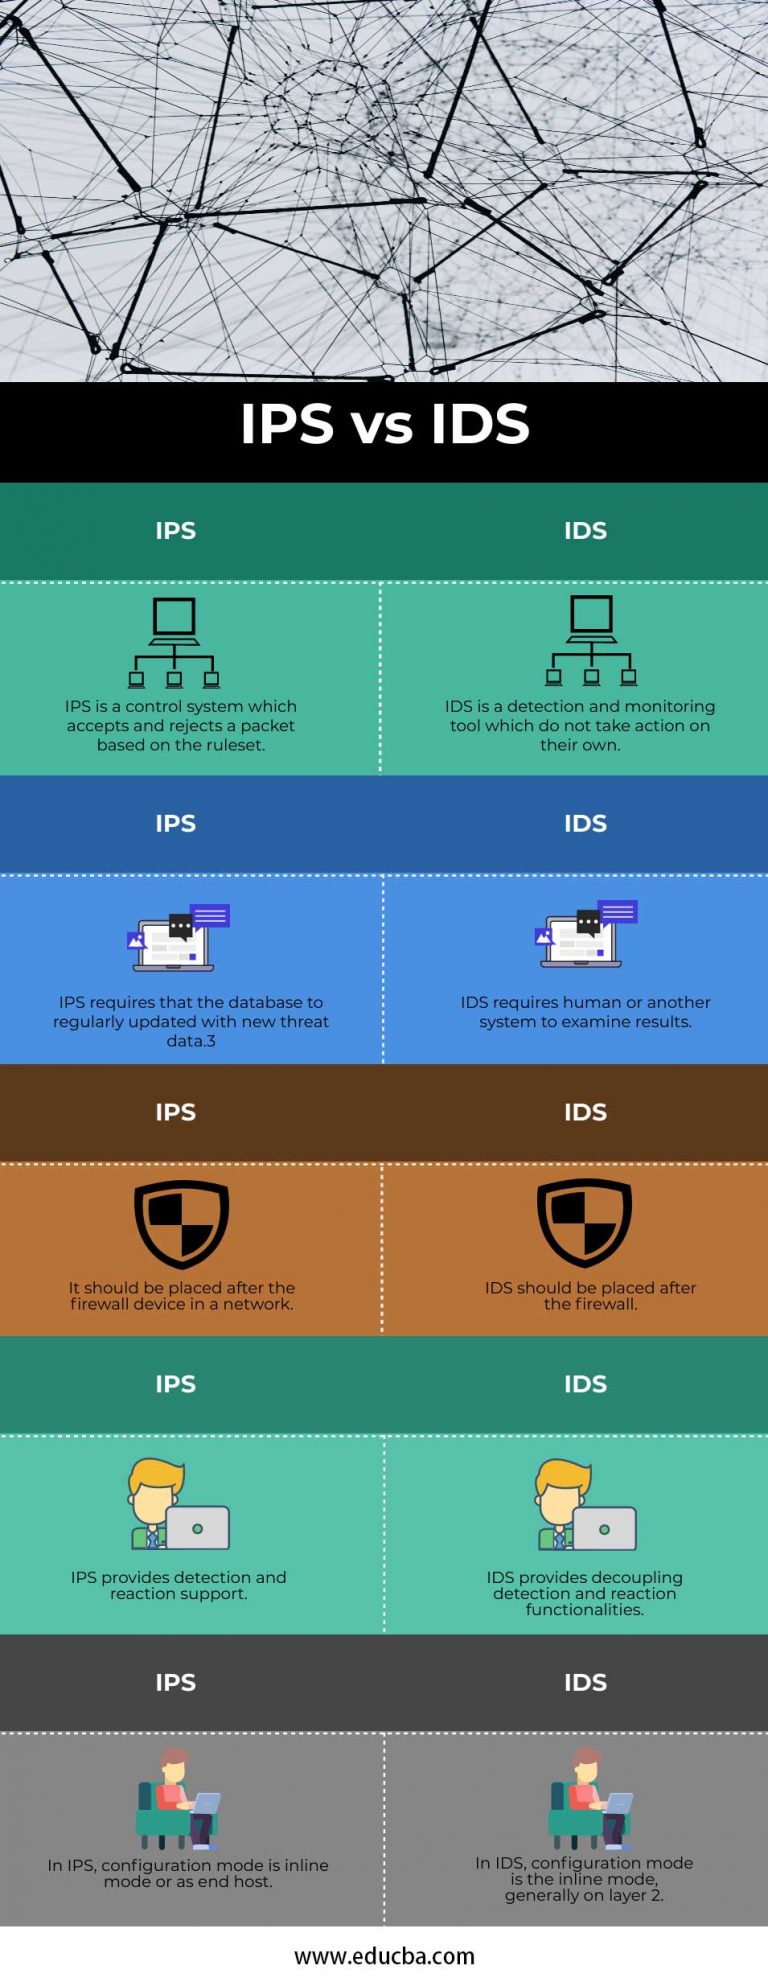 Ips id com. IDS IPS. IDS vs IPS. Типы систем IPS/IDS. IPS-Level.